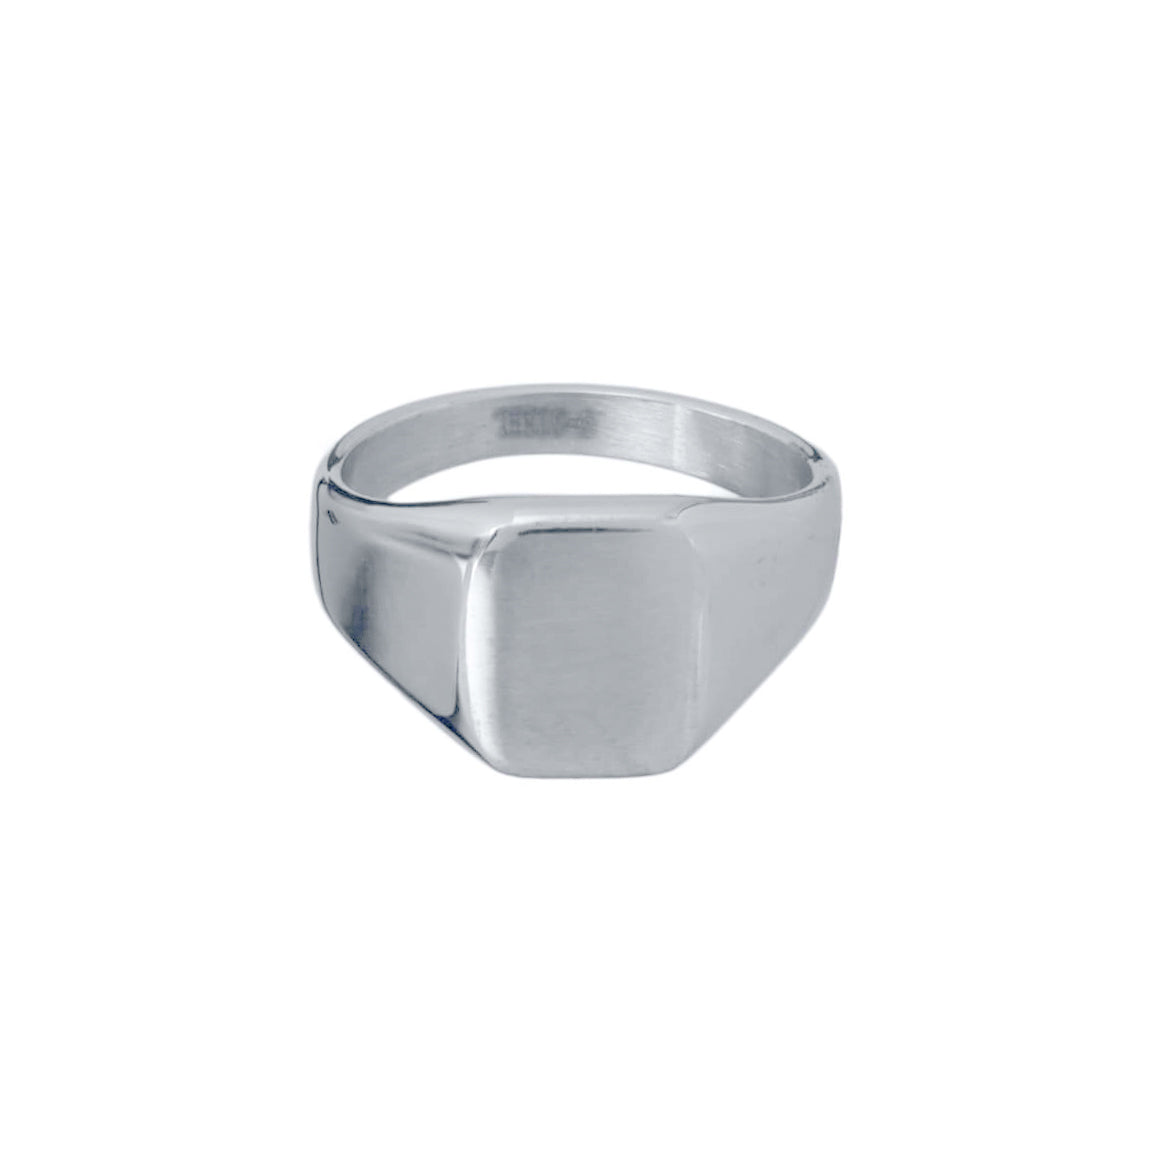 Steel wedding ring